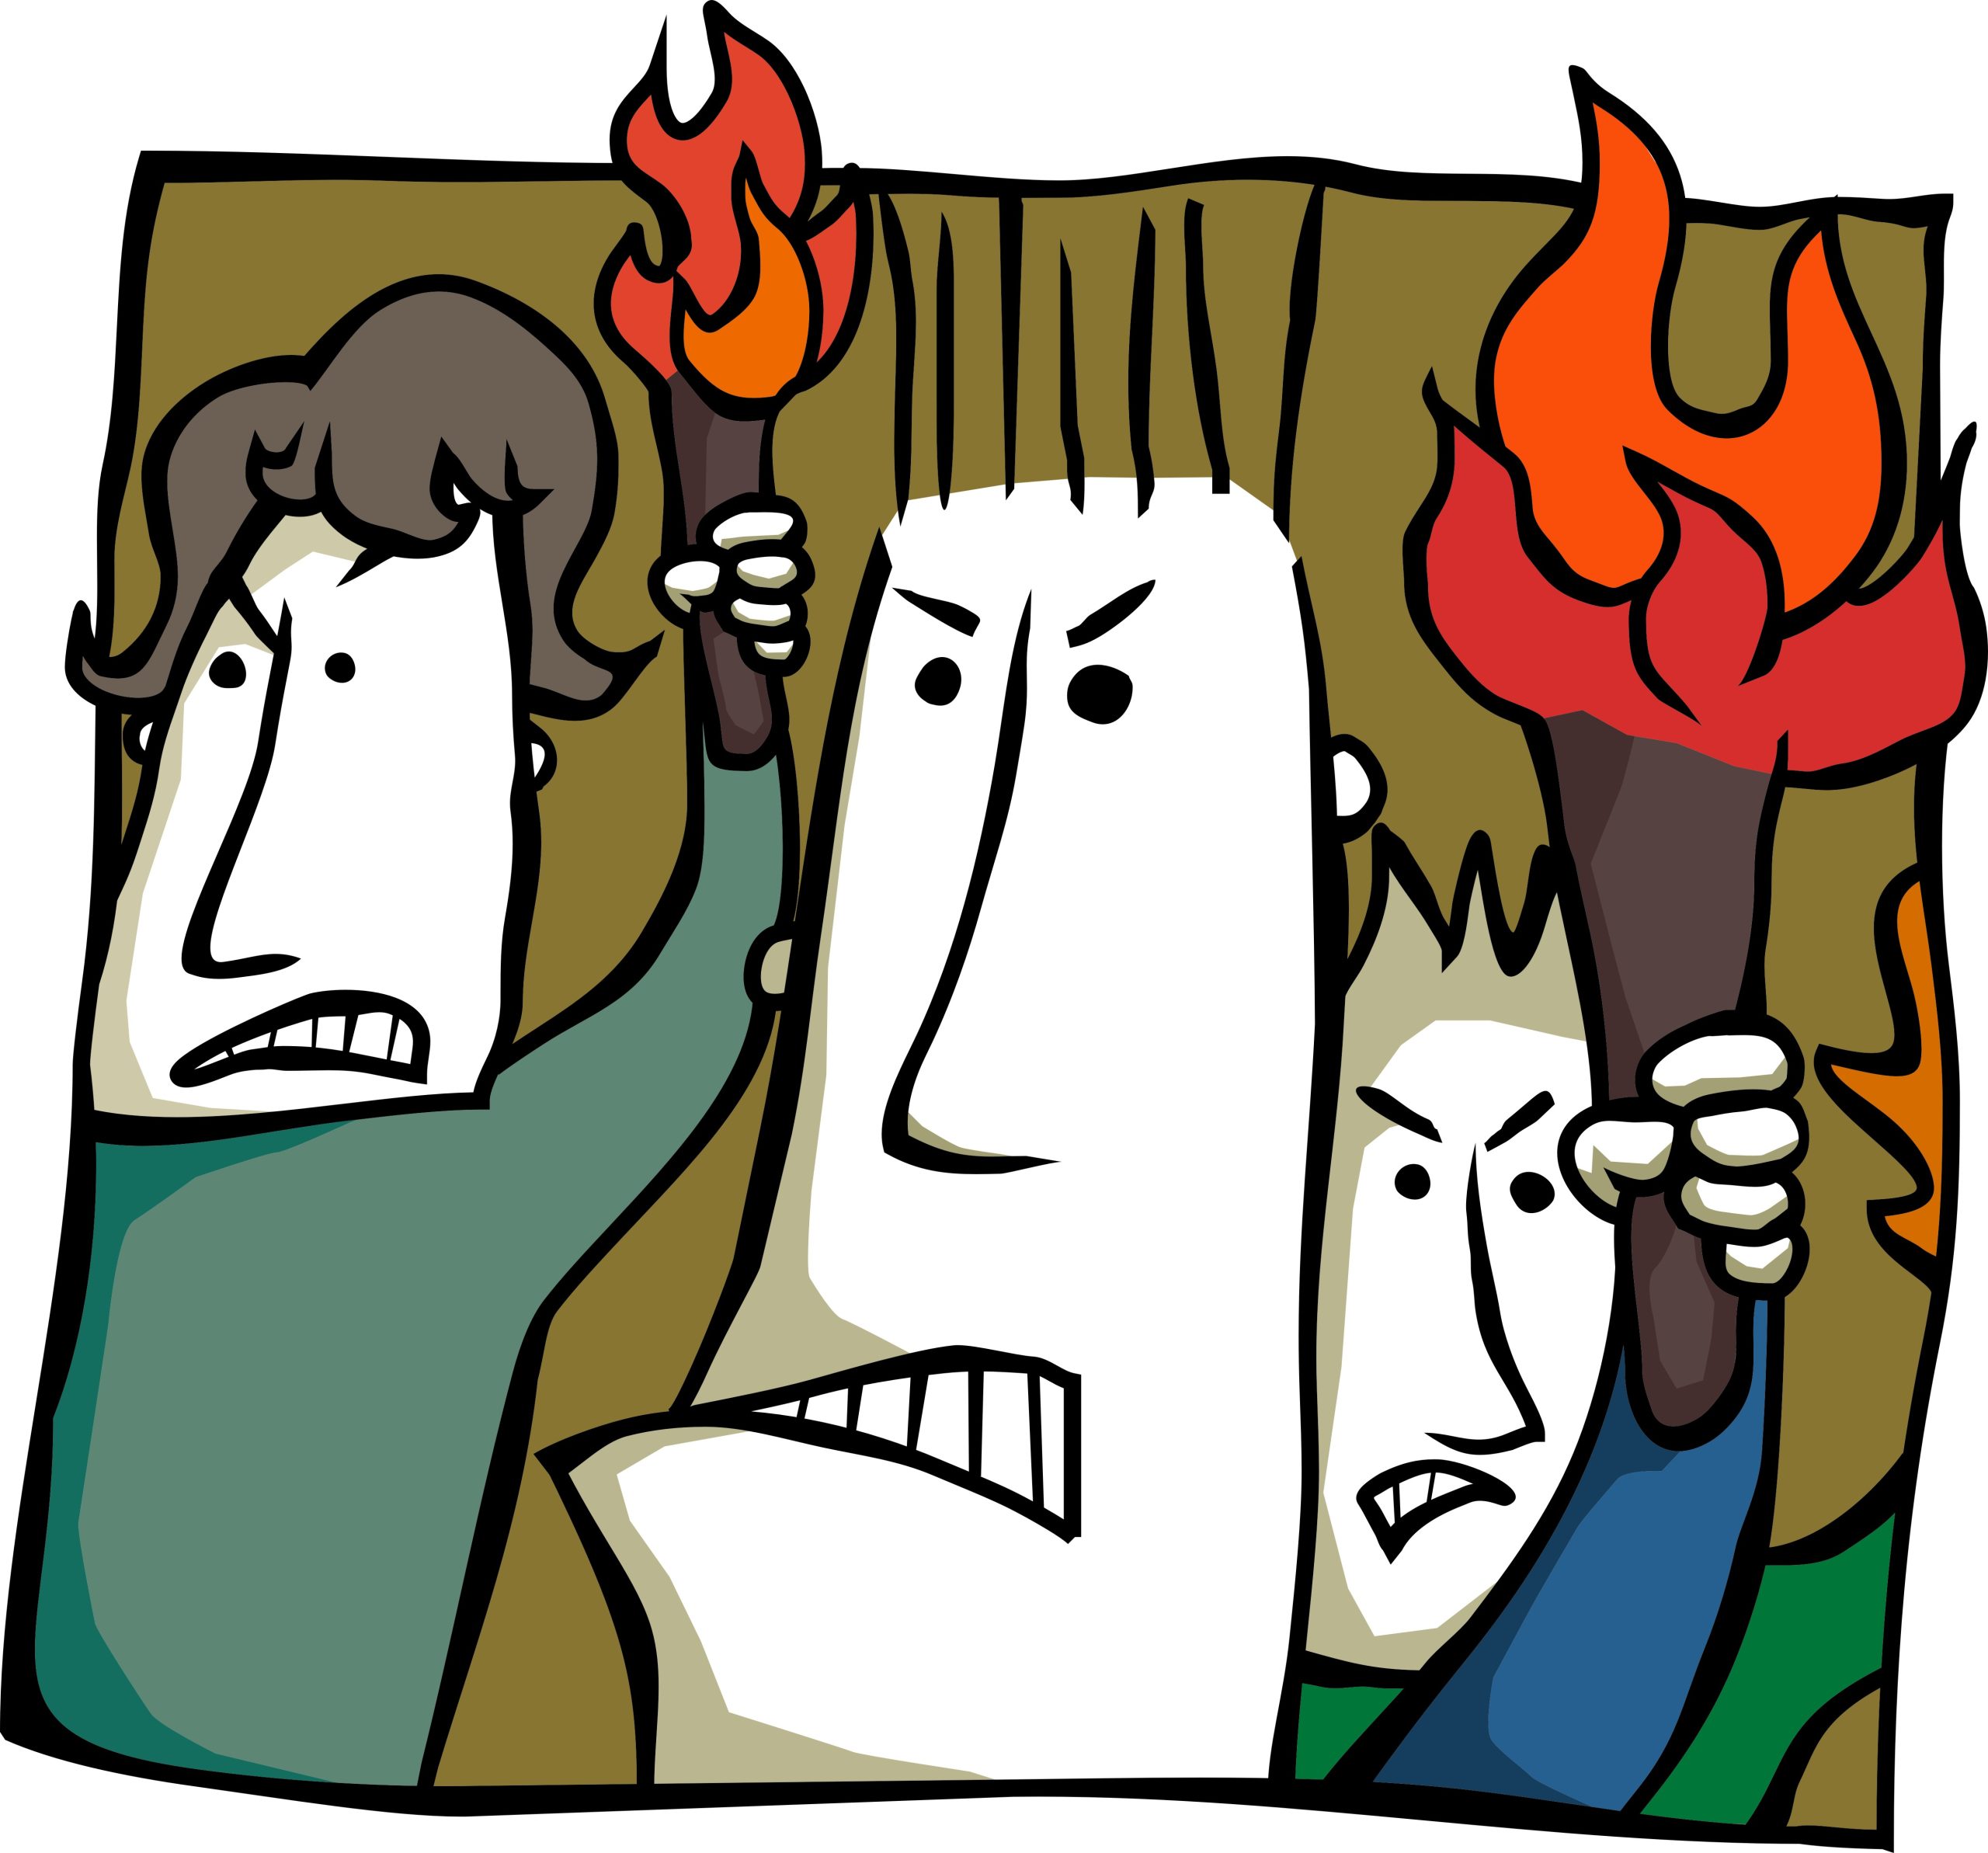 https://depositphotos.com/66645923/stock-illustration-angry-torch-bearers.html